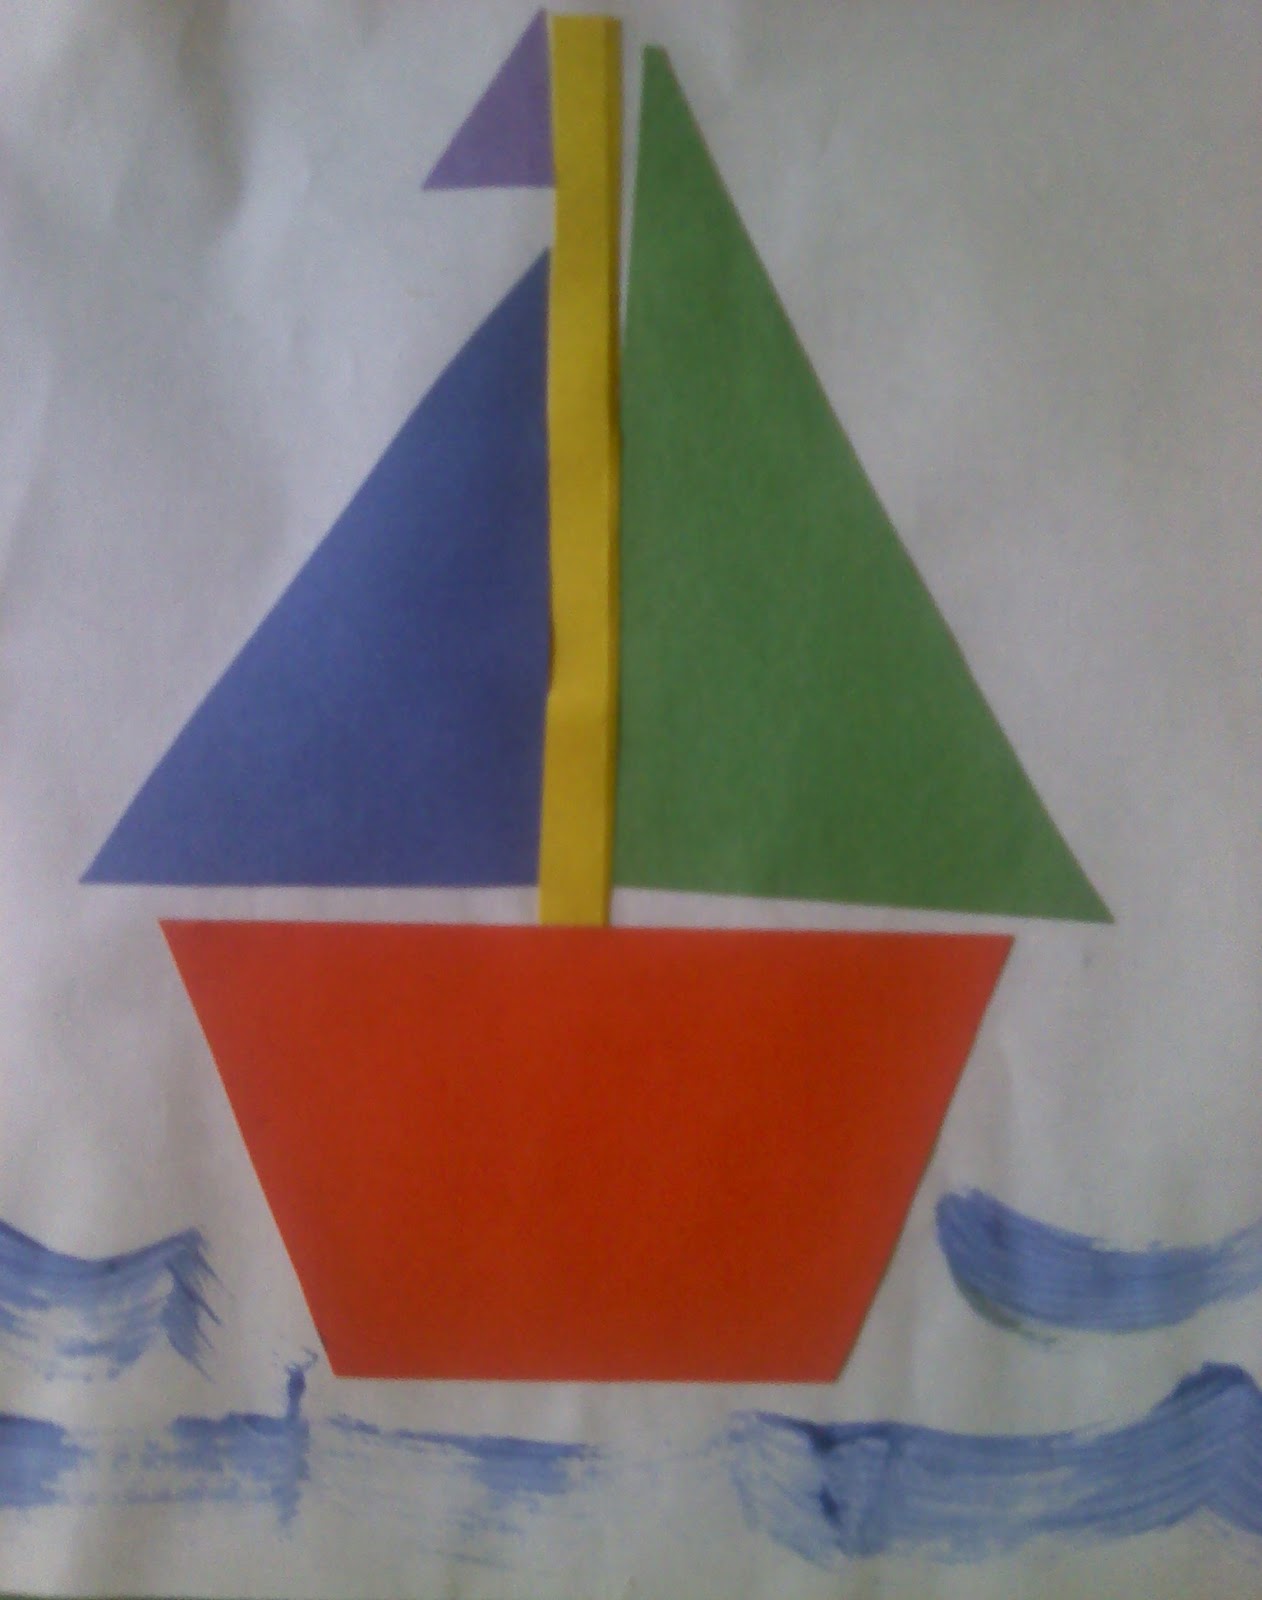 Shape Sailboat! Use Shapes to create this sail boat. Paint waves at 